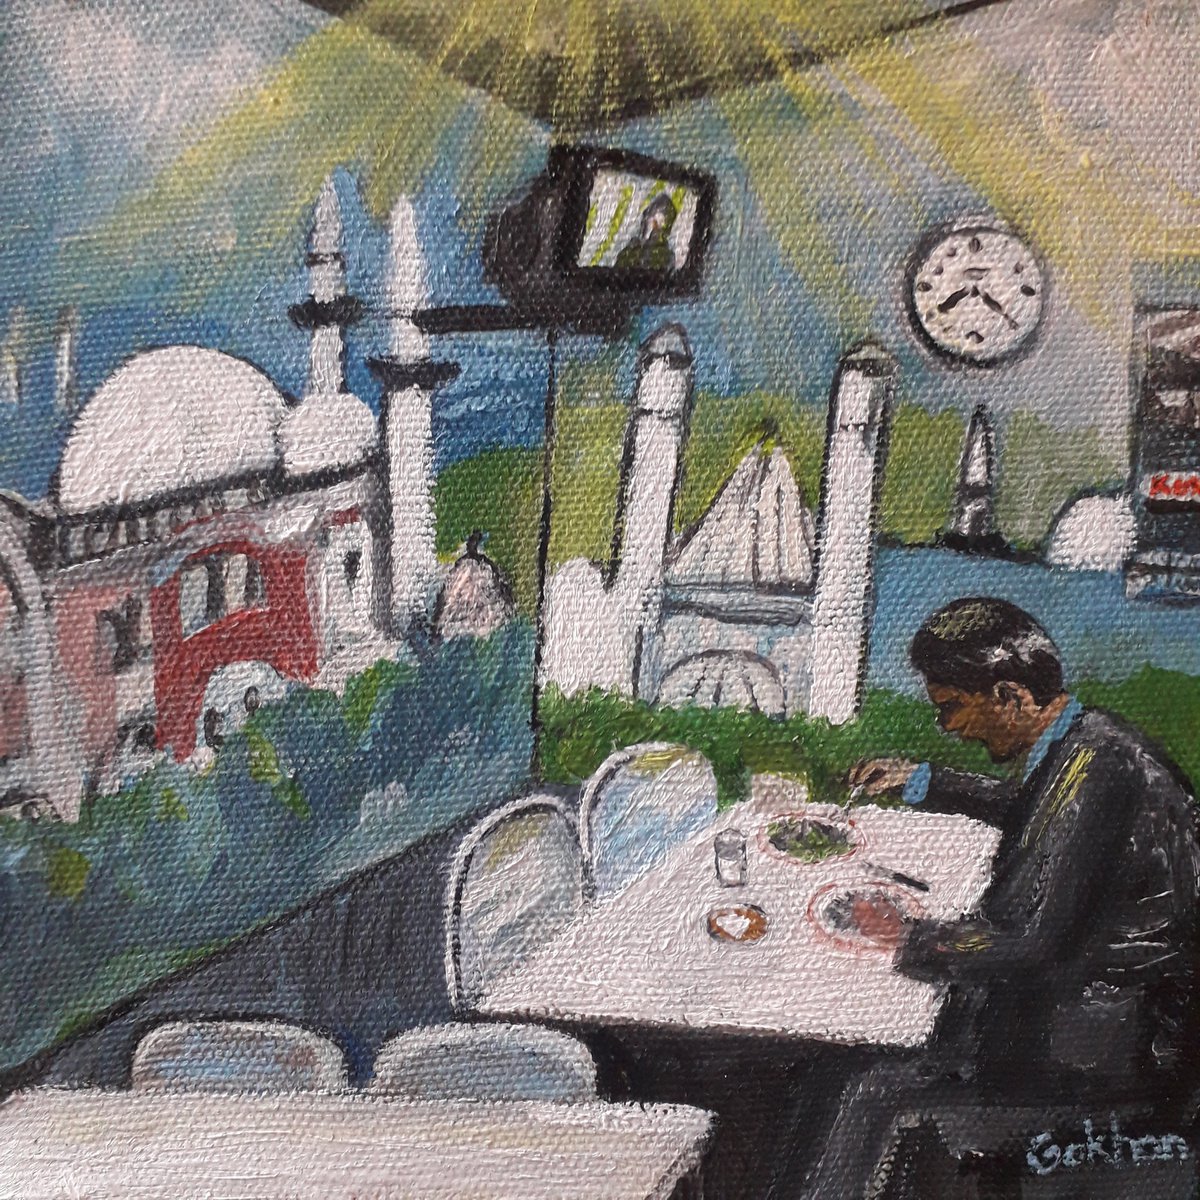 Alone in an Istanbul tavern by Gokhan  Alpgiray